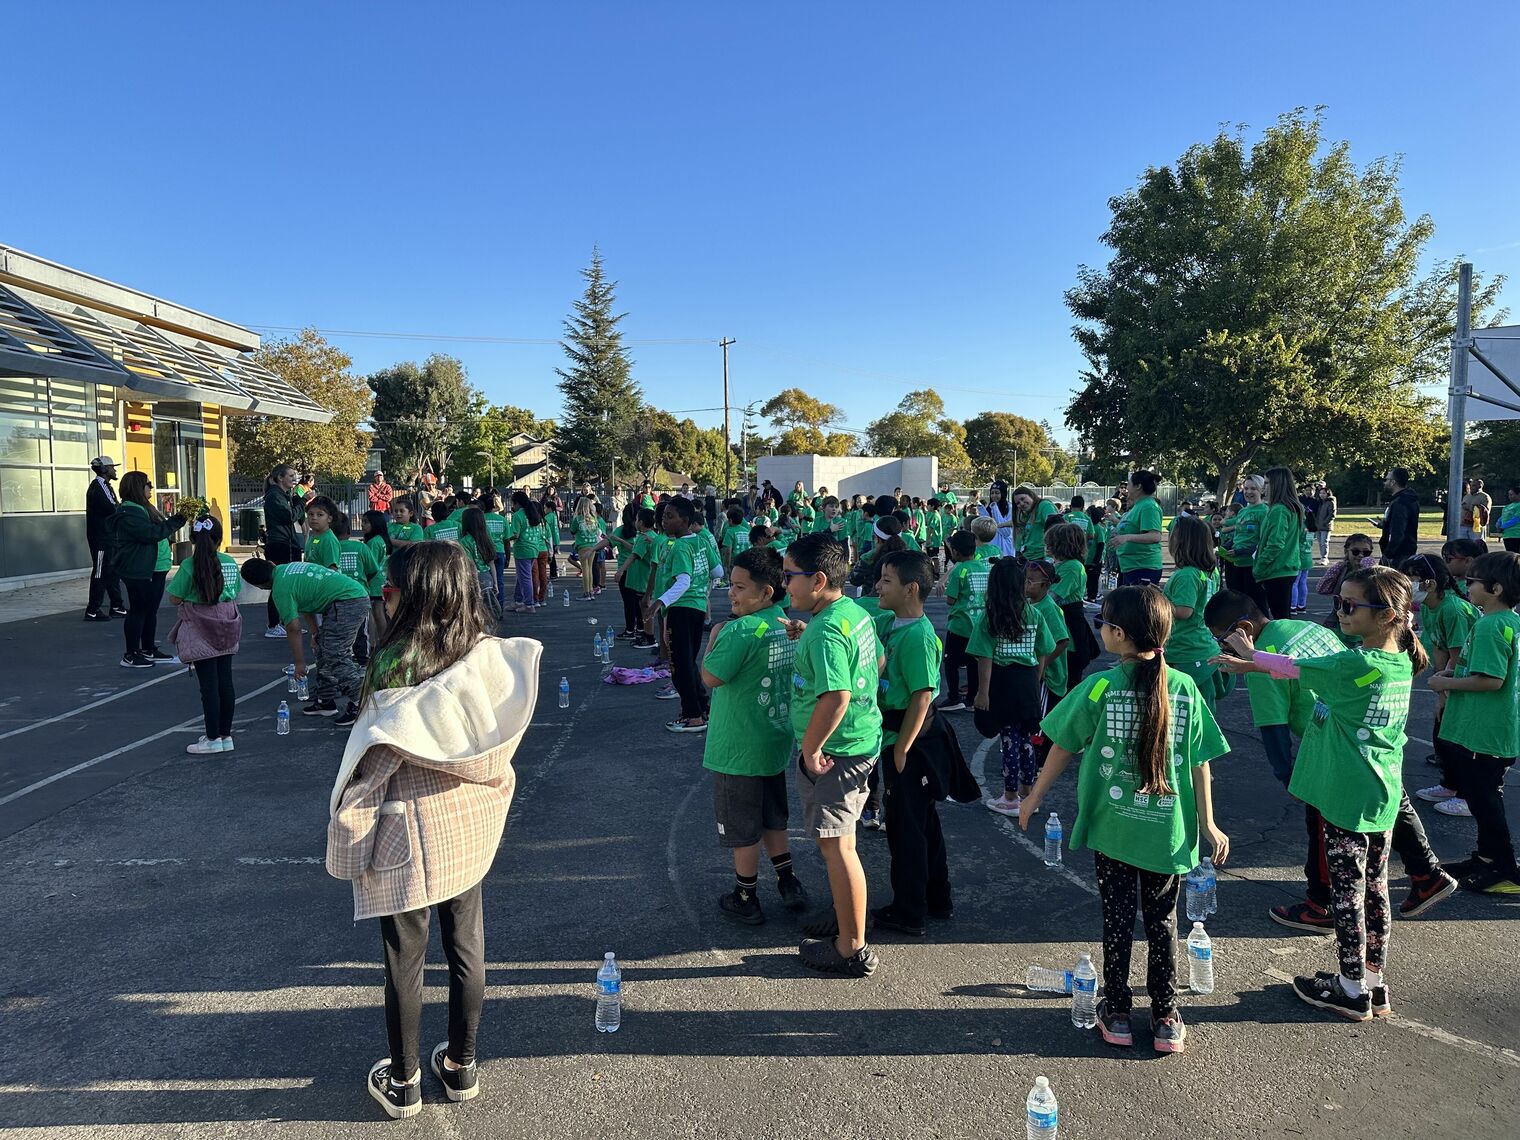 Children in green shirts exercising